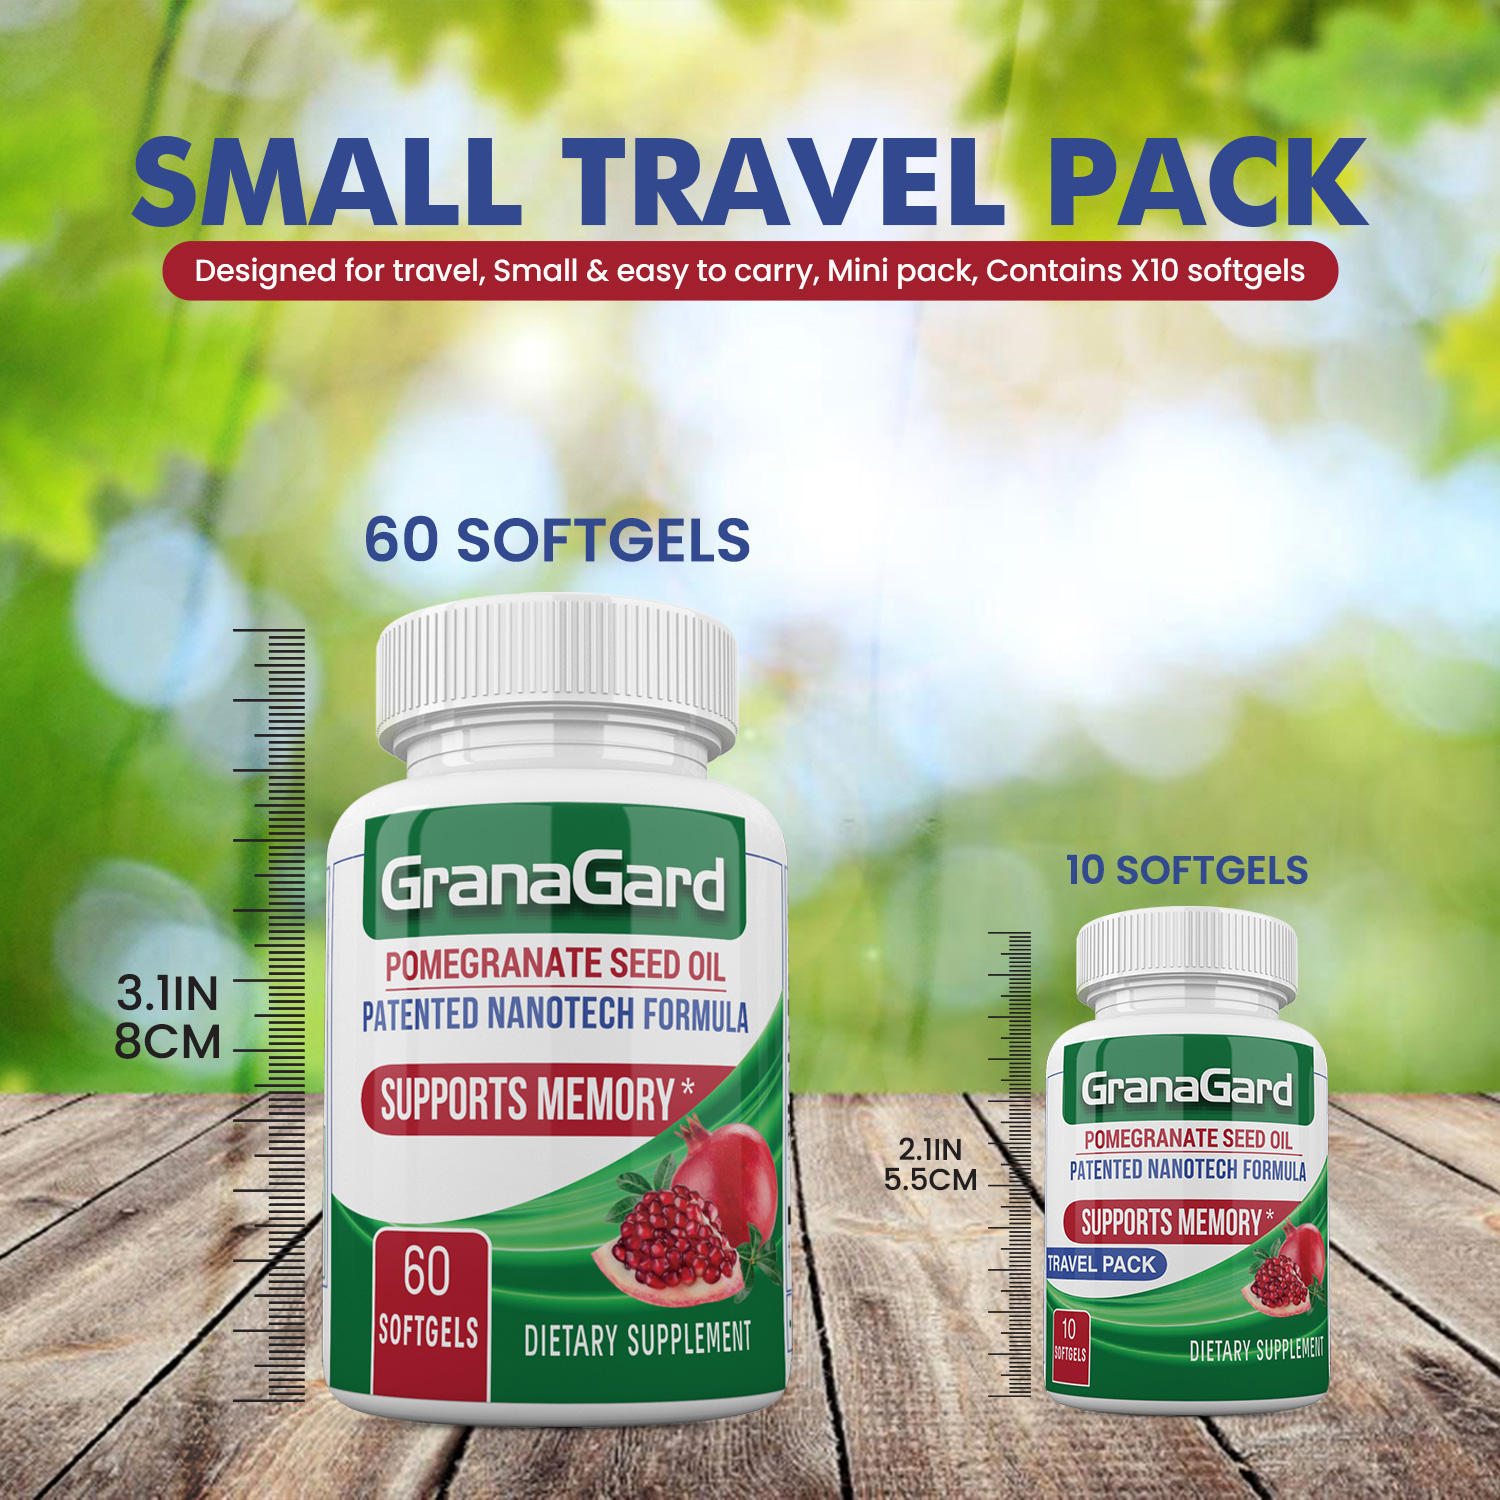 Comparing GranaGard Smalll Travel Packs